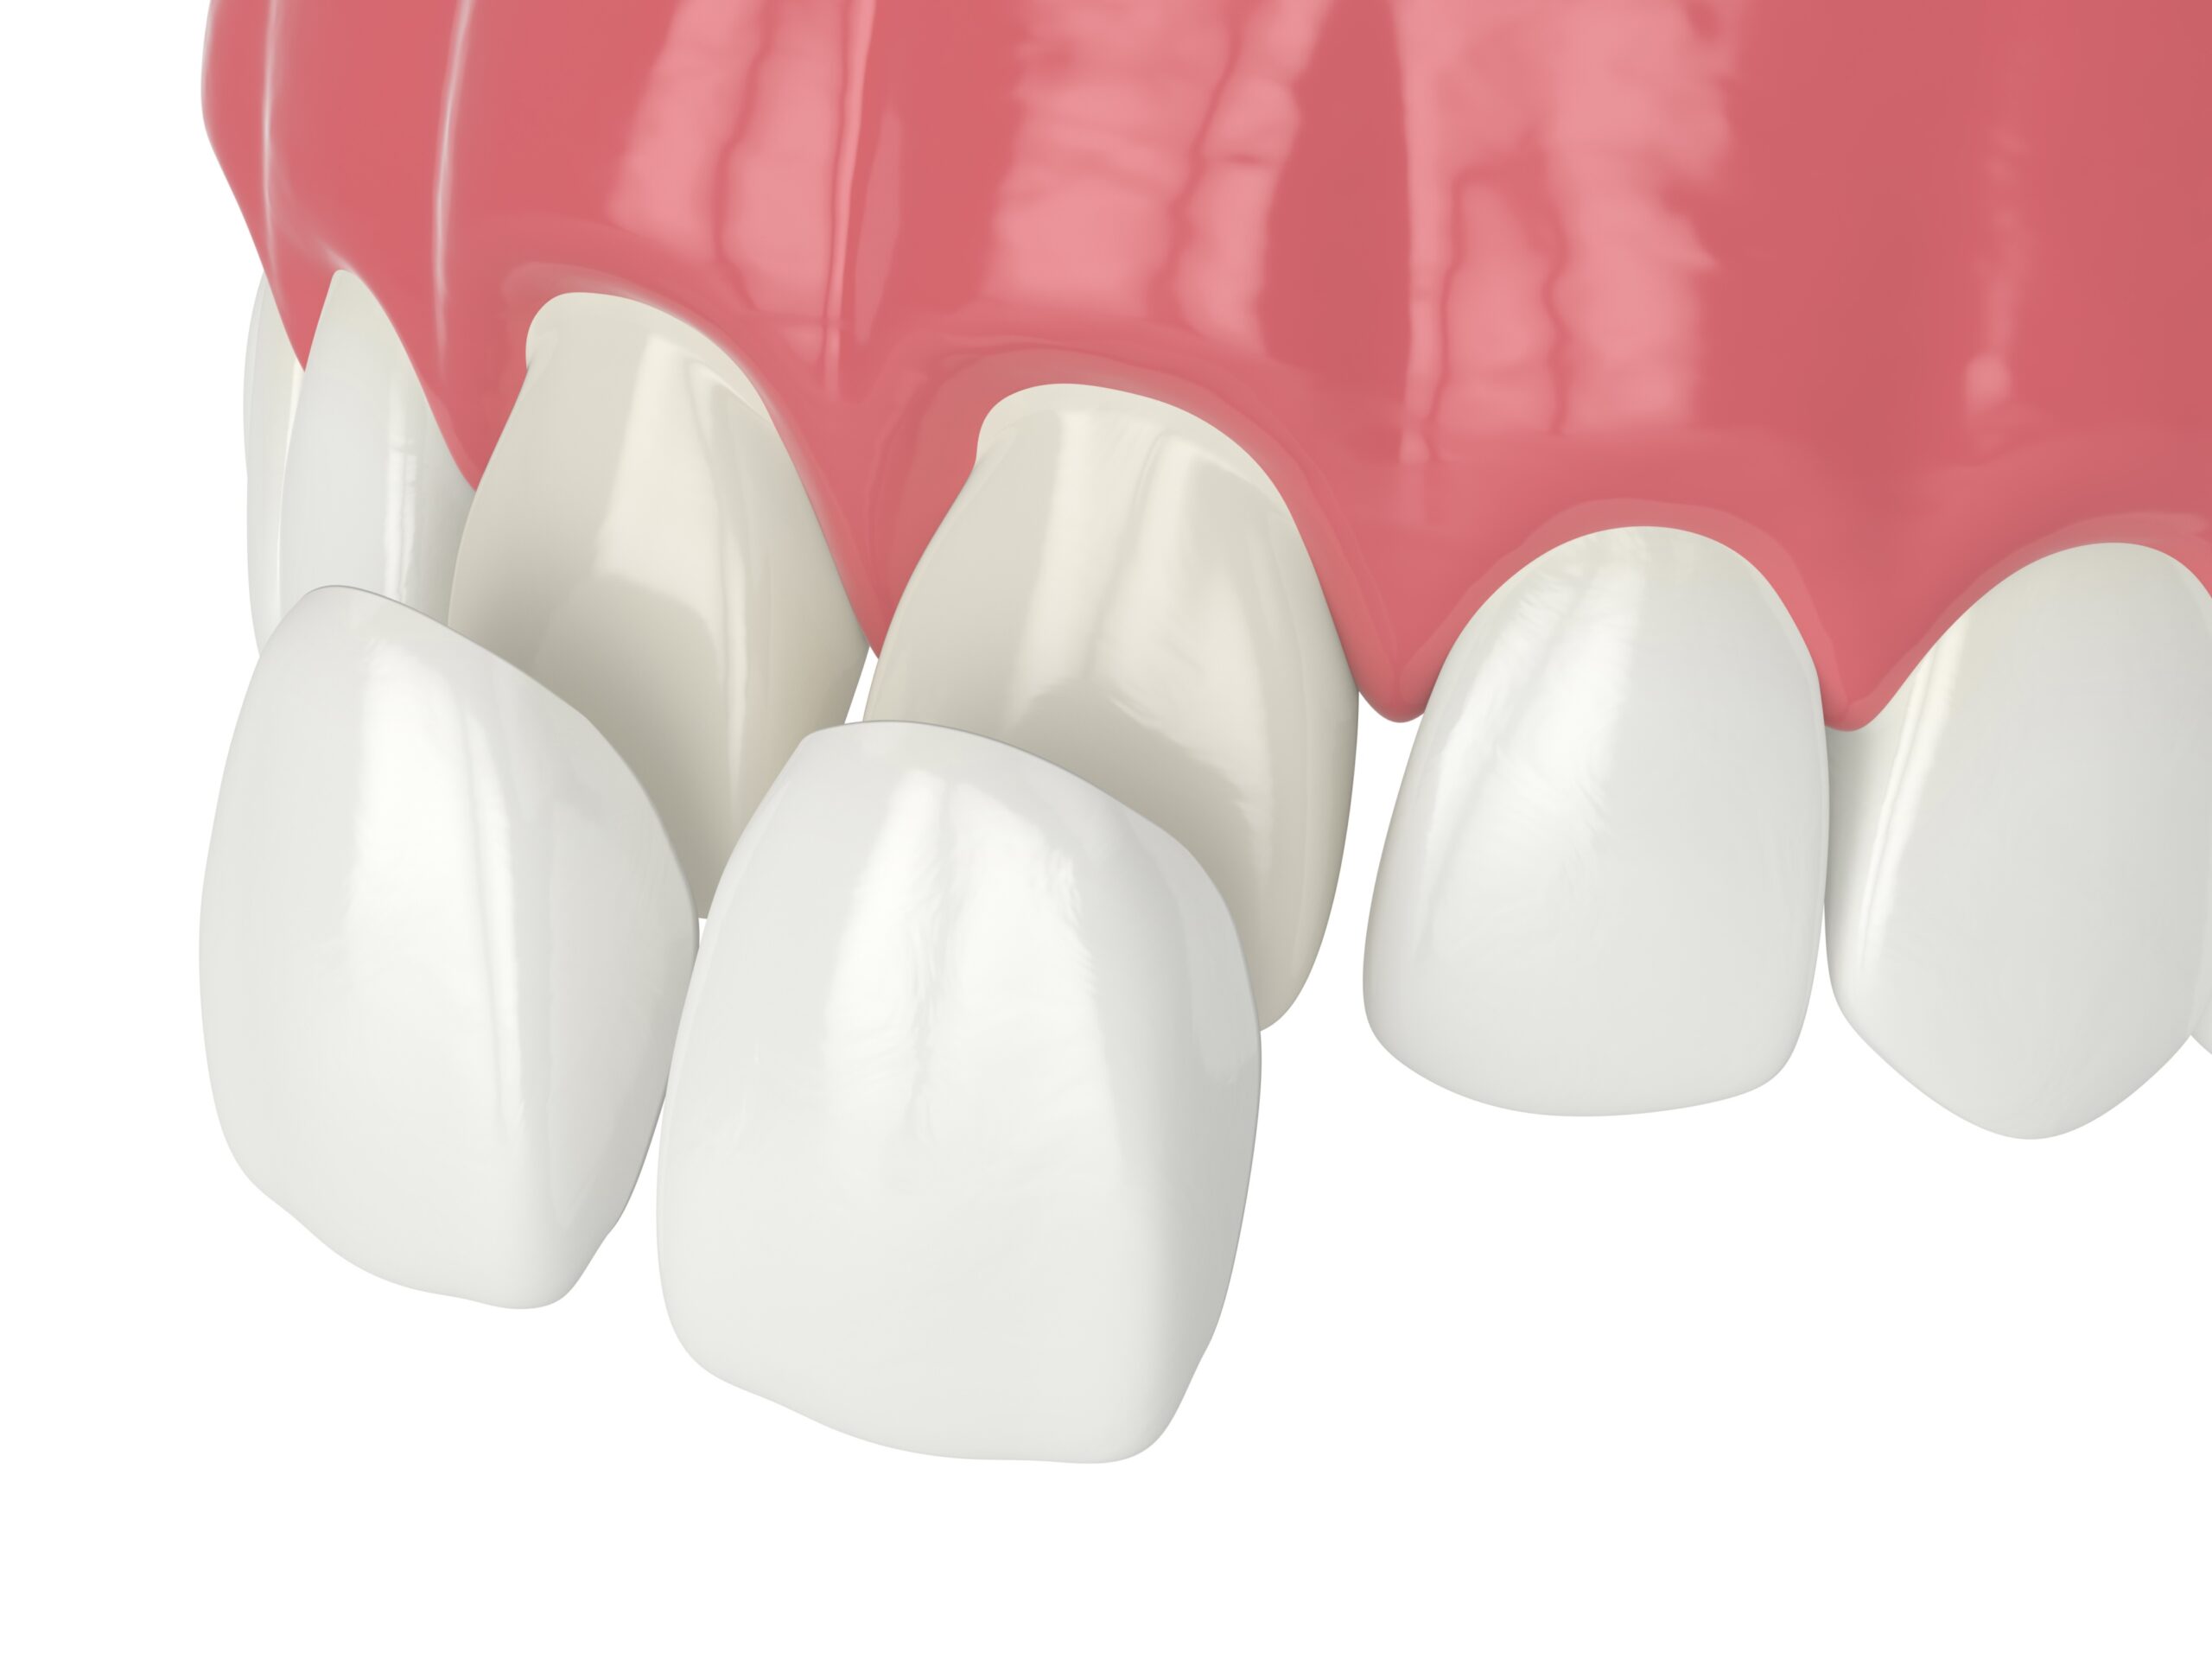 Choosing the Right Dentist for Your Porcelain Veneer Treatment